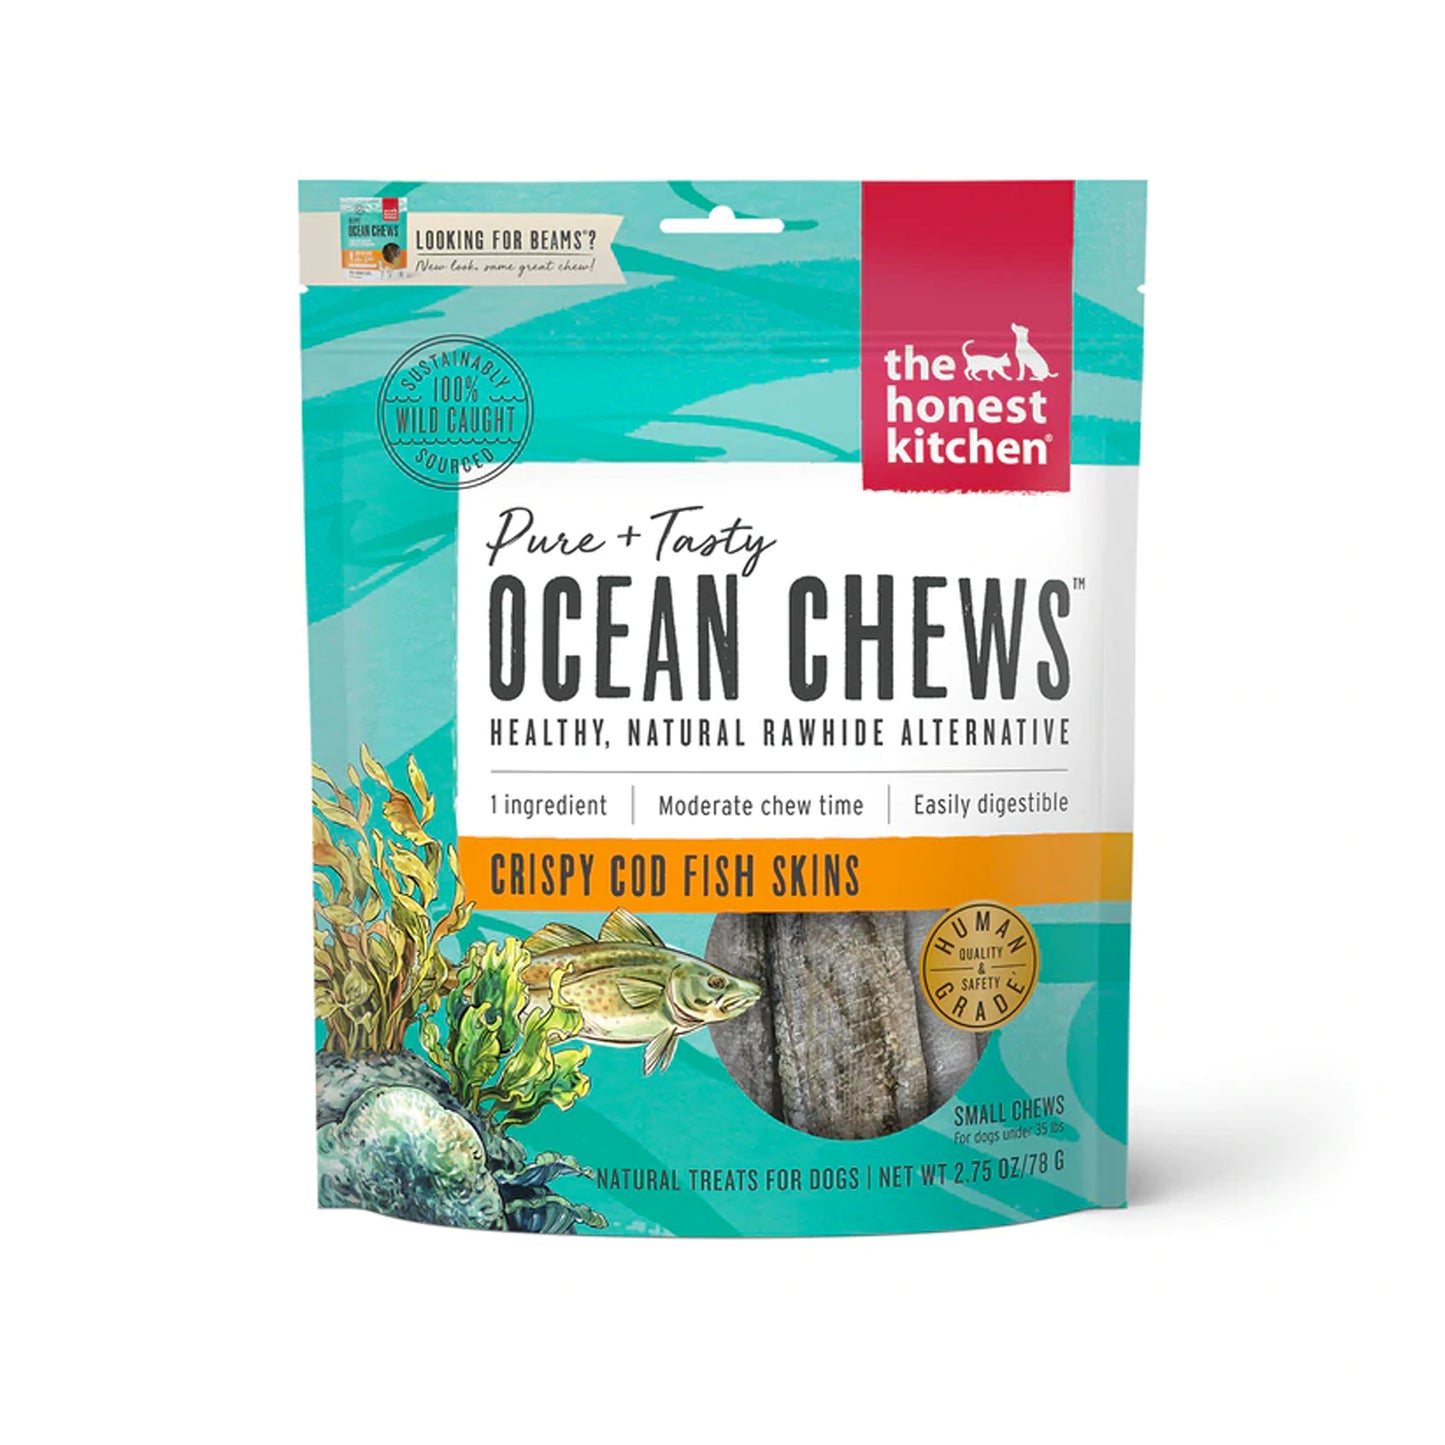 The Honest Kitchen Ocean Chews Fish Skin Beams Treats Crispy Cod Image